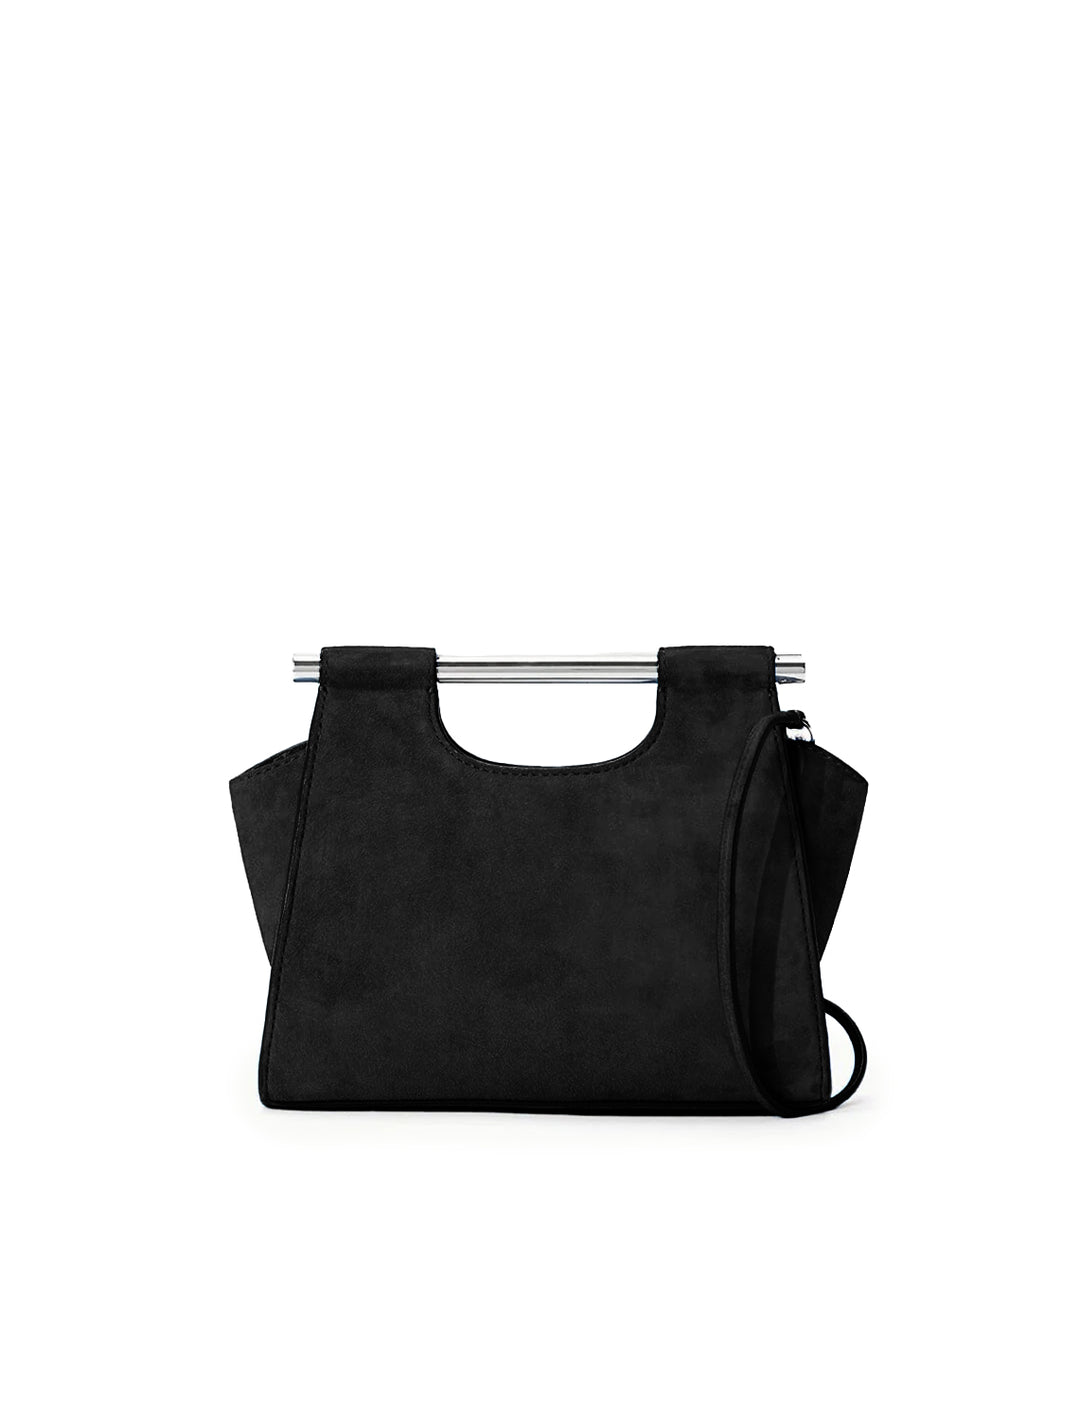 Front view of STAUD's mar mini bag in black.